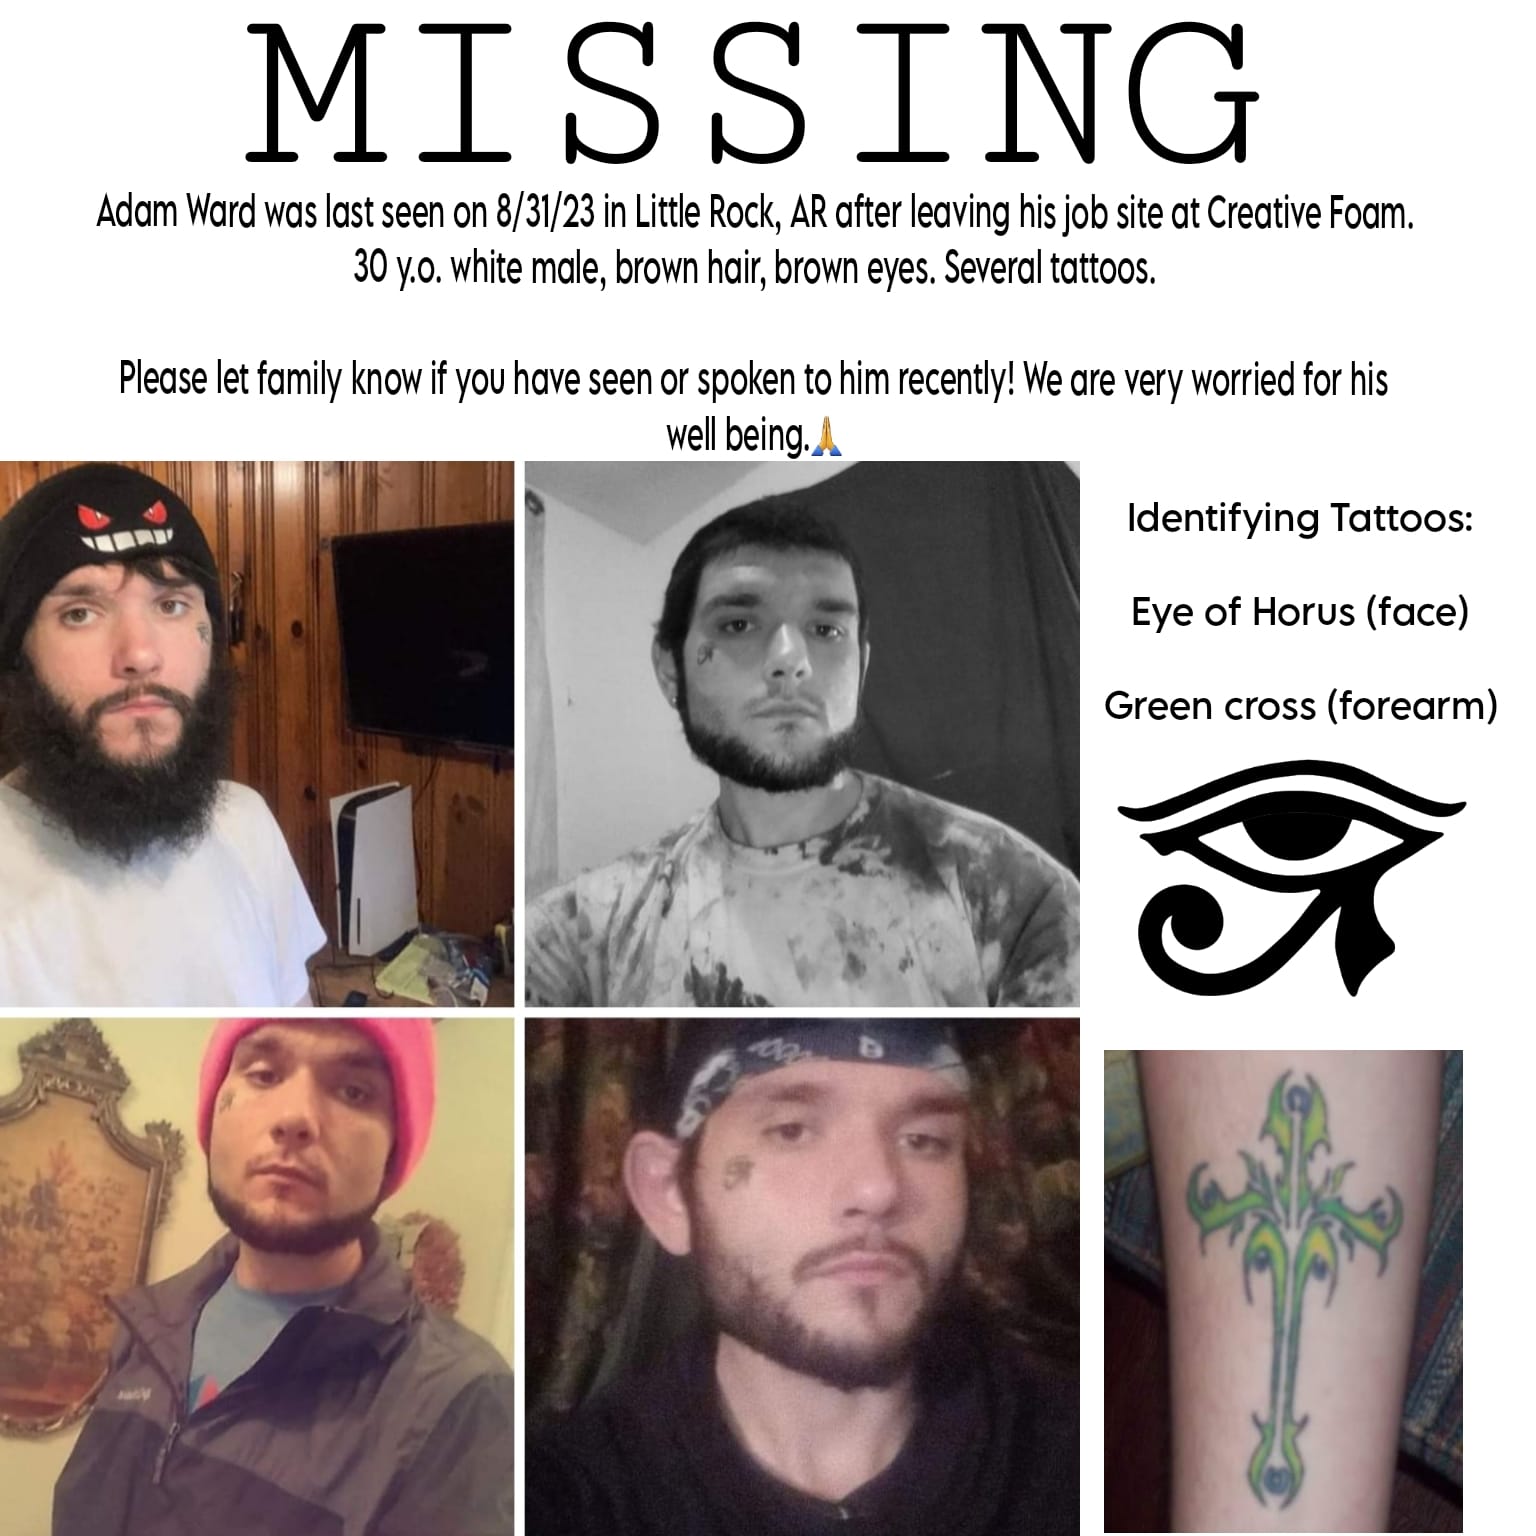 Have you seen Adam Ward?